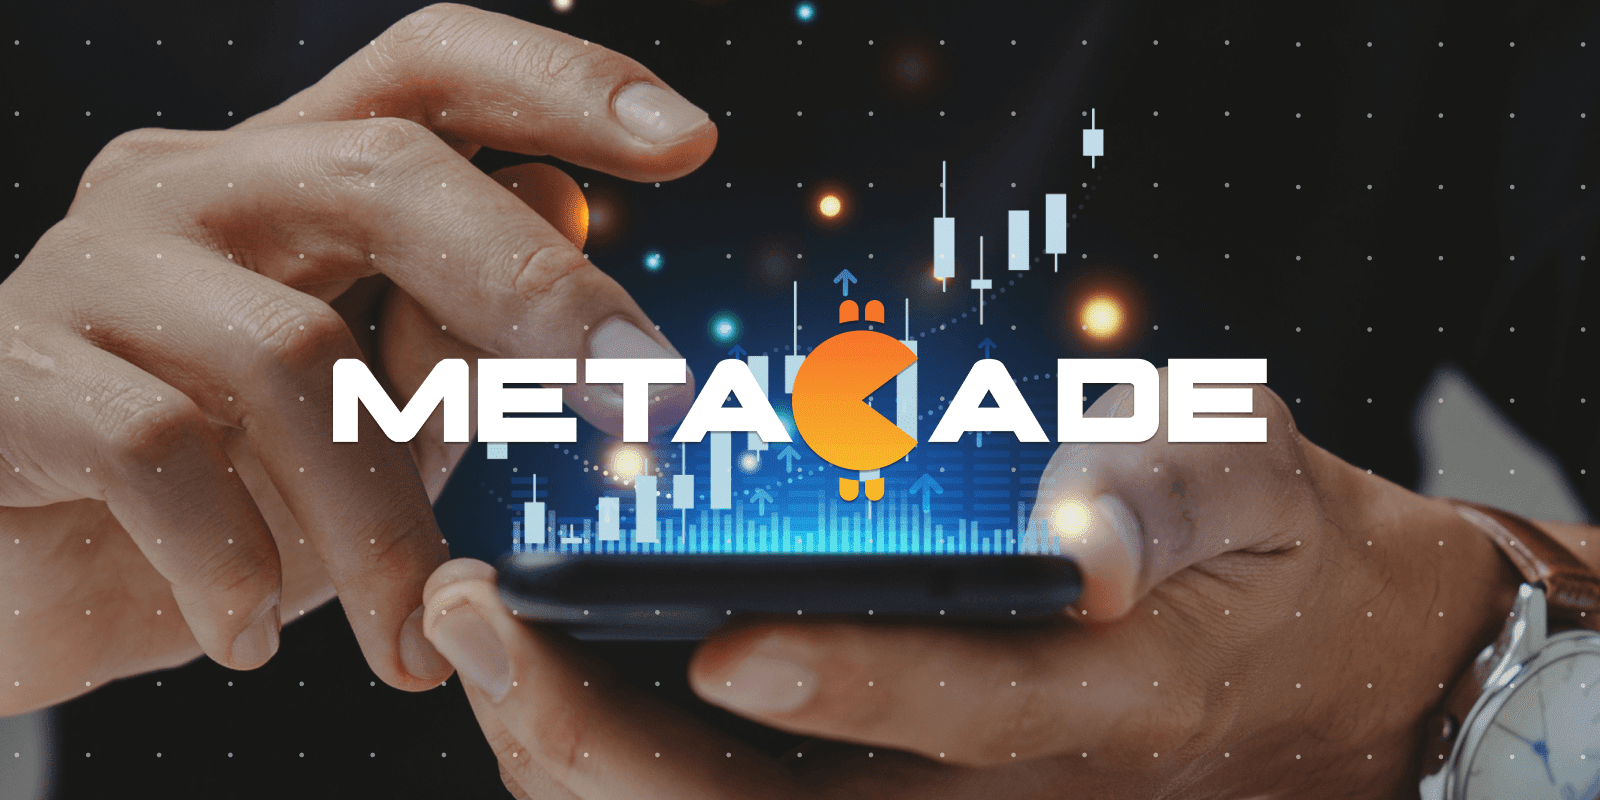 Metacade，現在最好的加密貨幣預售投資。